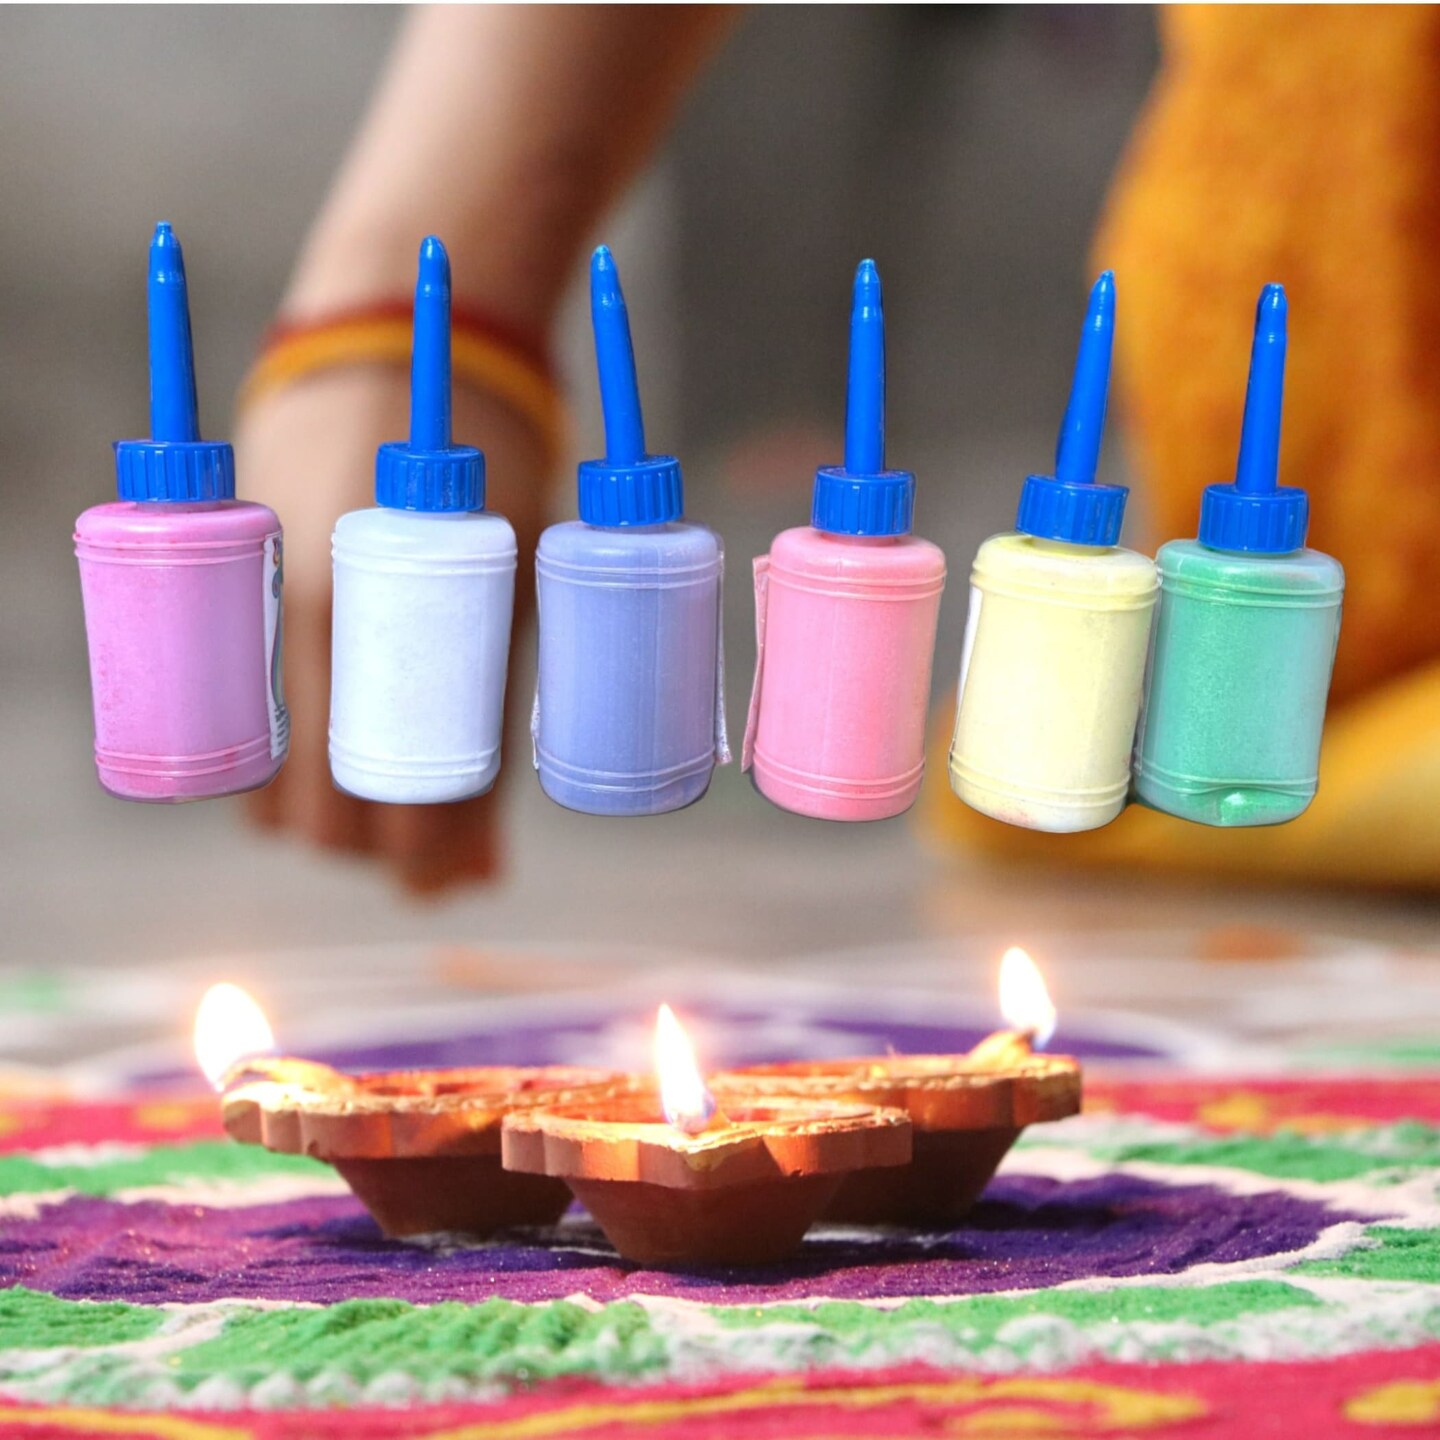 6 Color Rangoli Powder Kit, Rangoli Colors, Rangoli Decorations, Rangoli Making Kit, Rangoli Colors For Diwali, Navratri Decoration, Outdoor Diy Arts, Crafts, Colored Sand